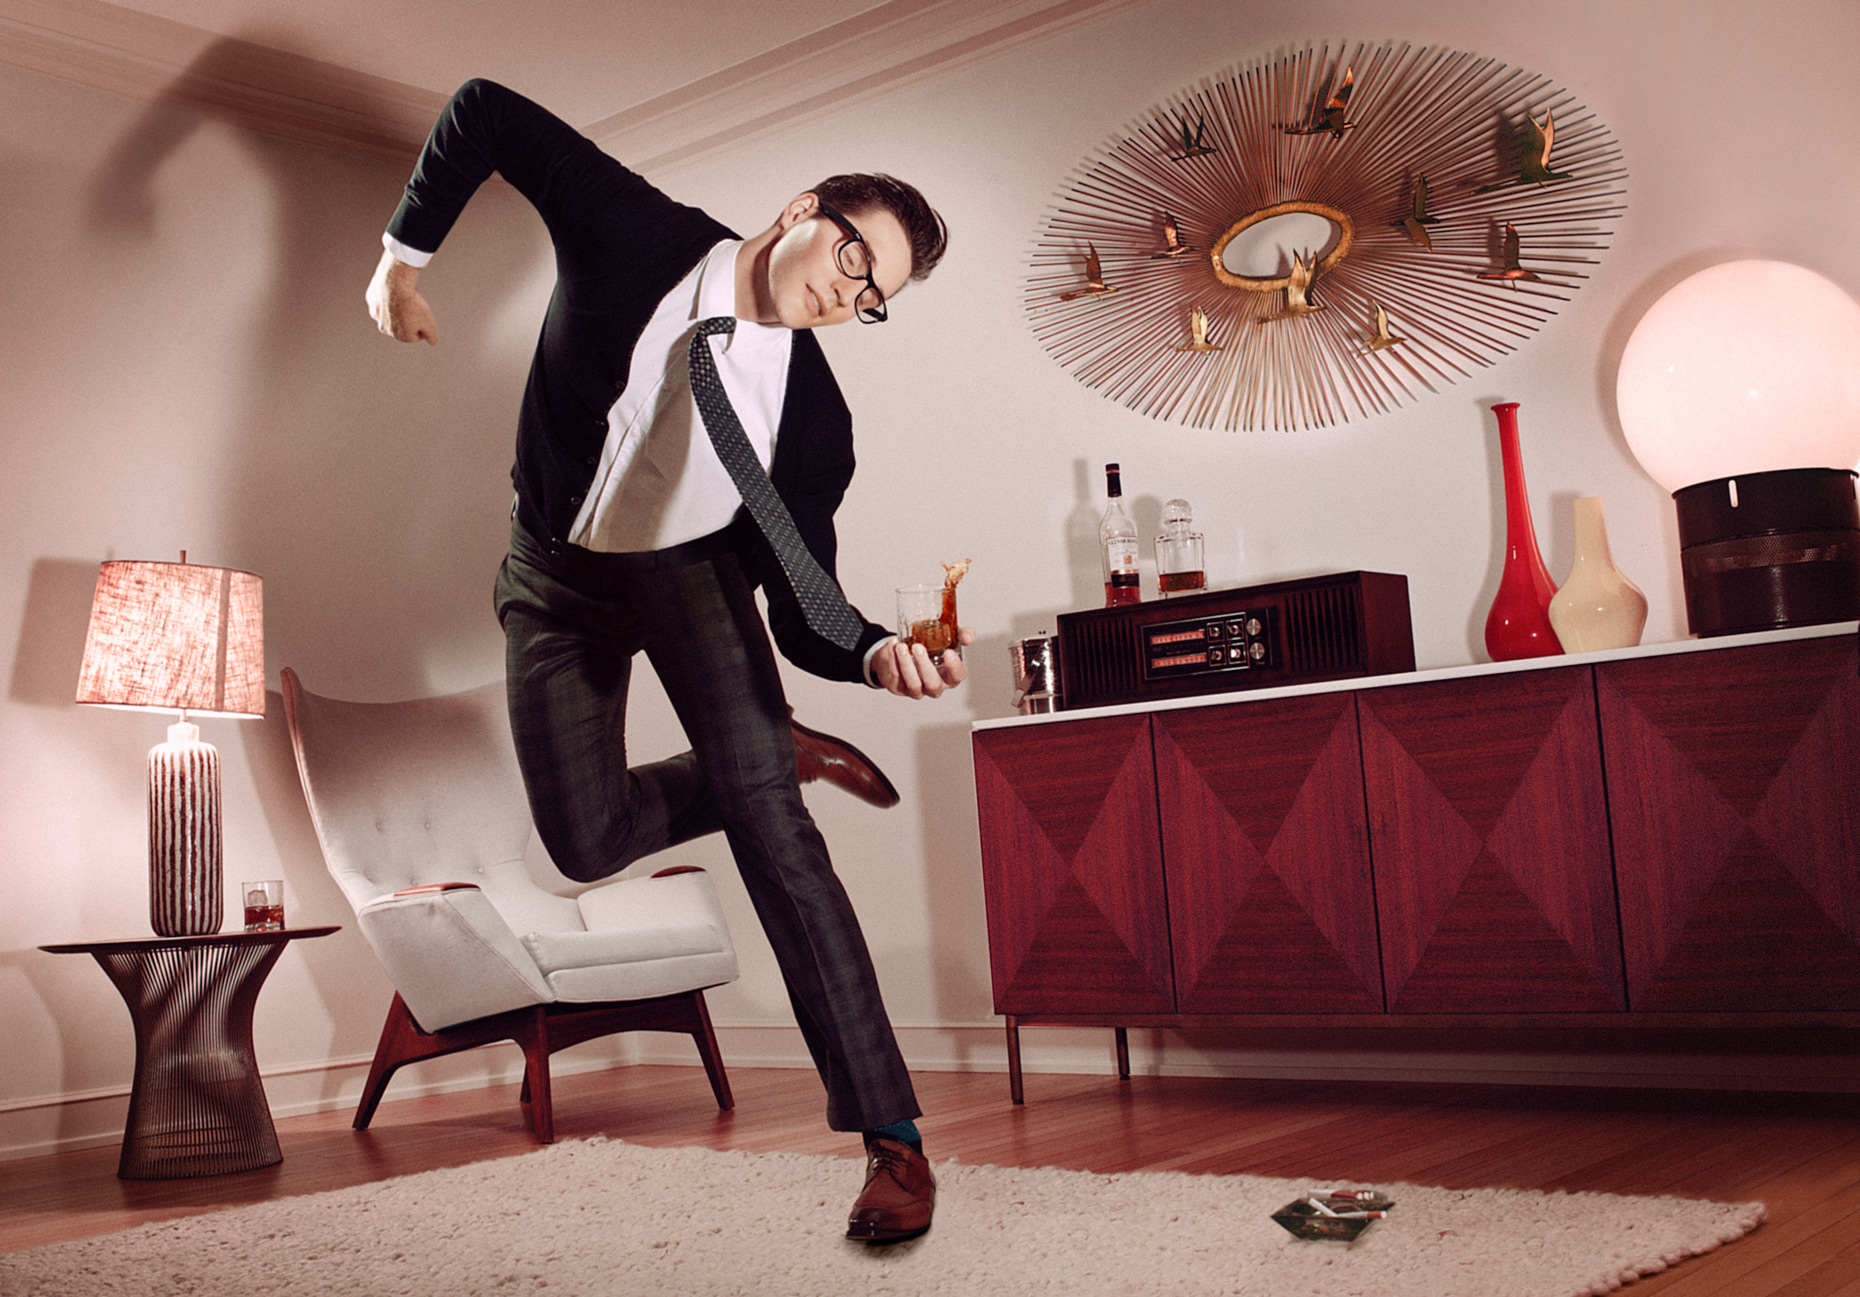 Mid centrury man dancing in living room | Conceptual Portrait by Saverio Truglia